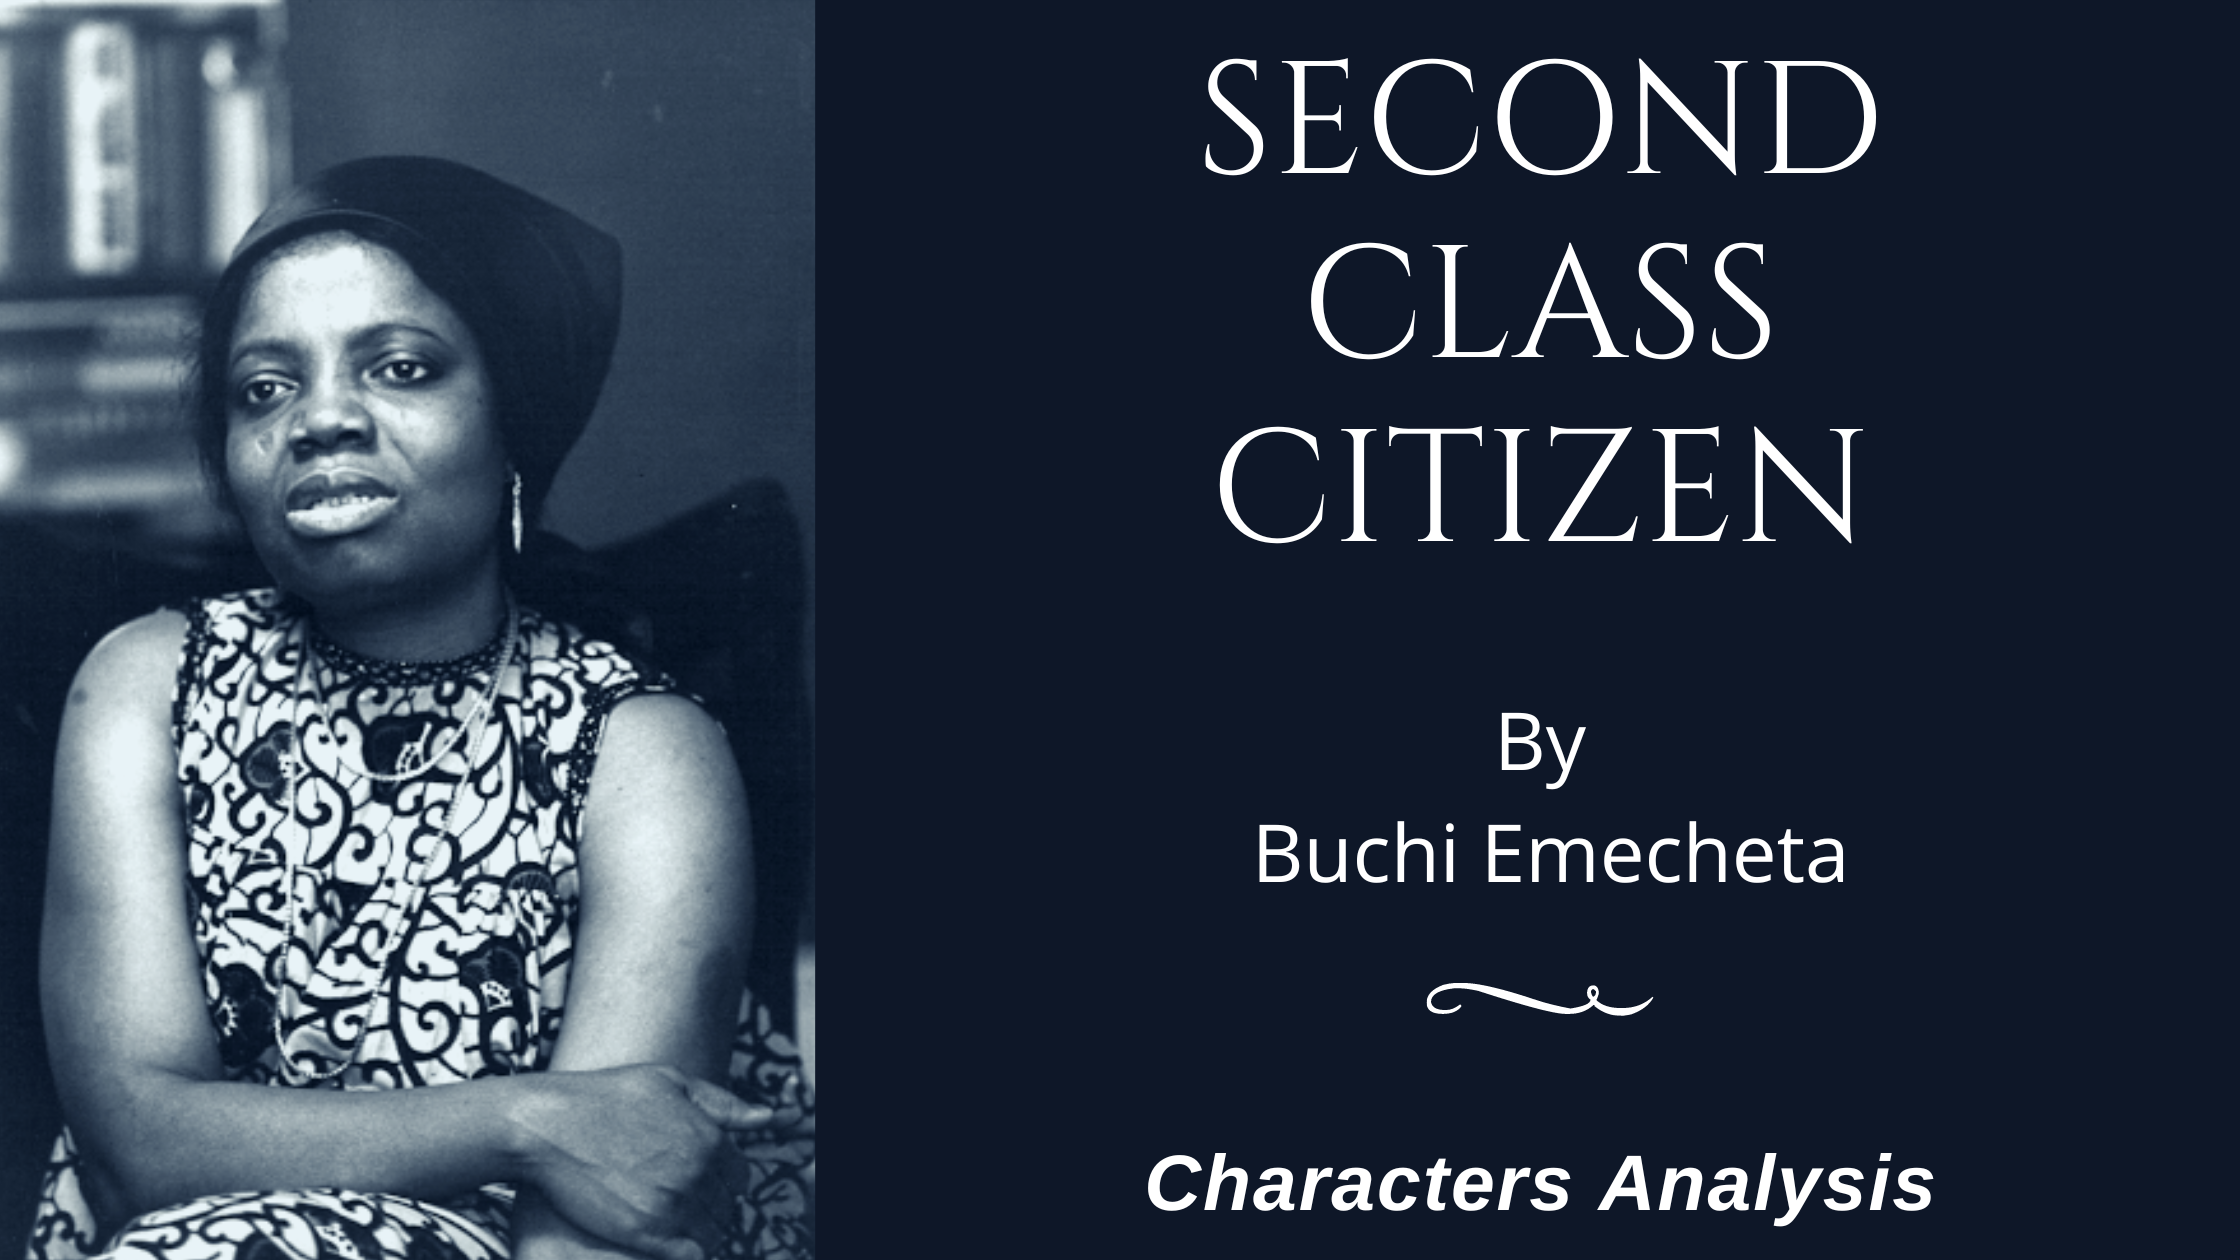 20+ Characters Analysis of Second Class Citizen by Buchi Emecheta